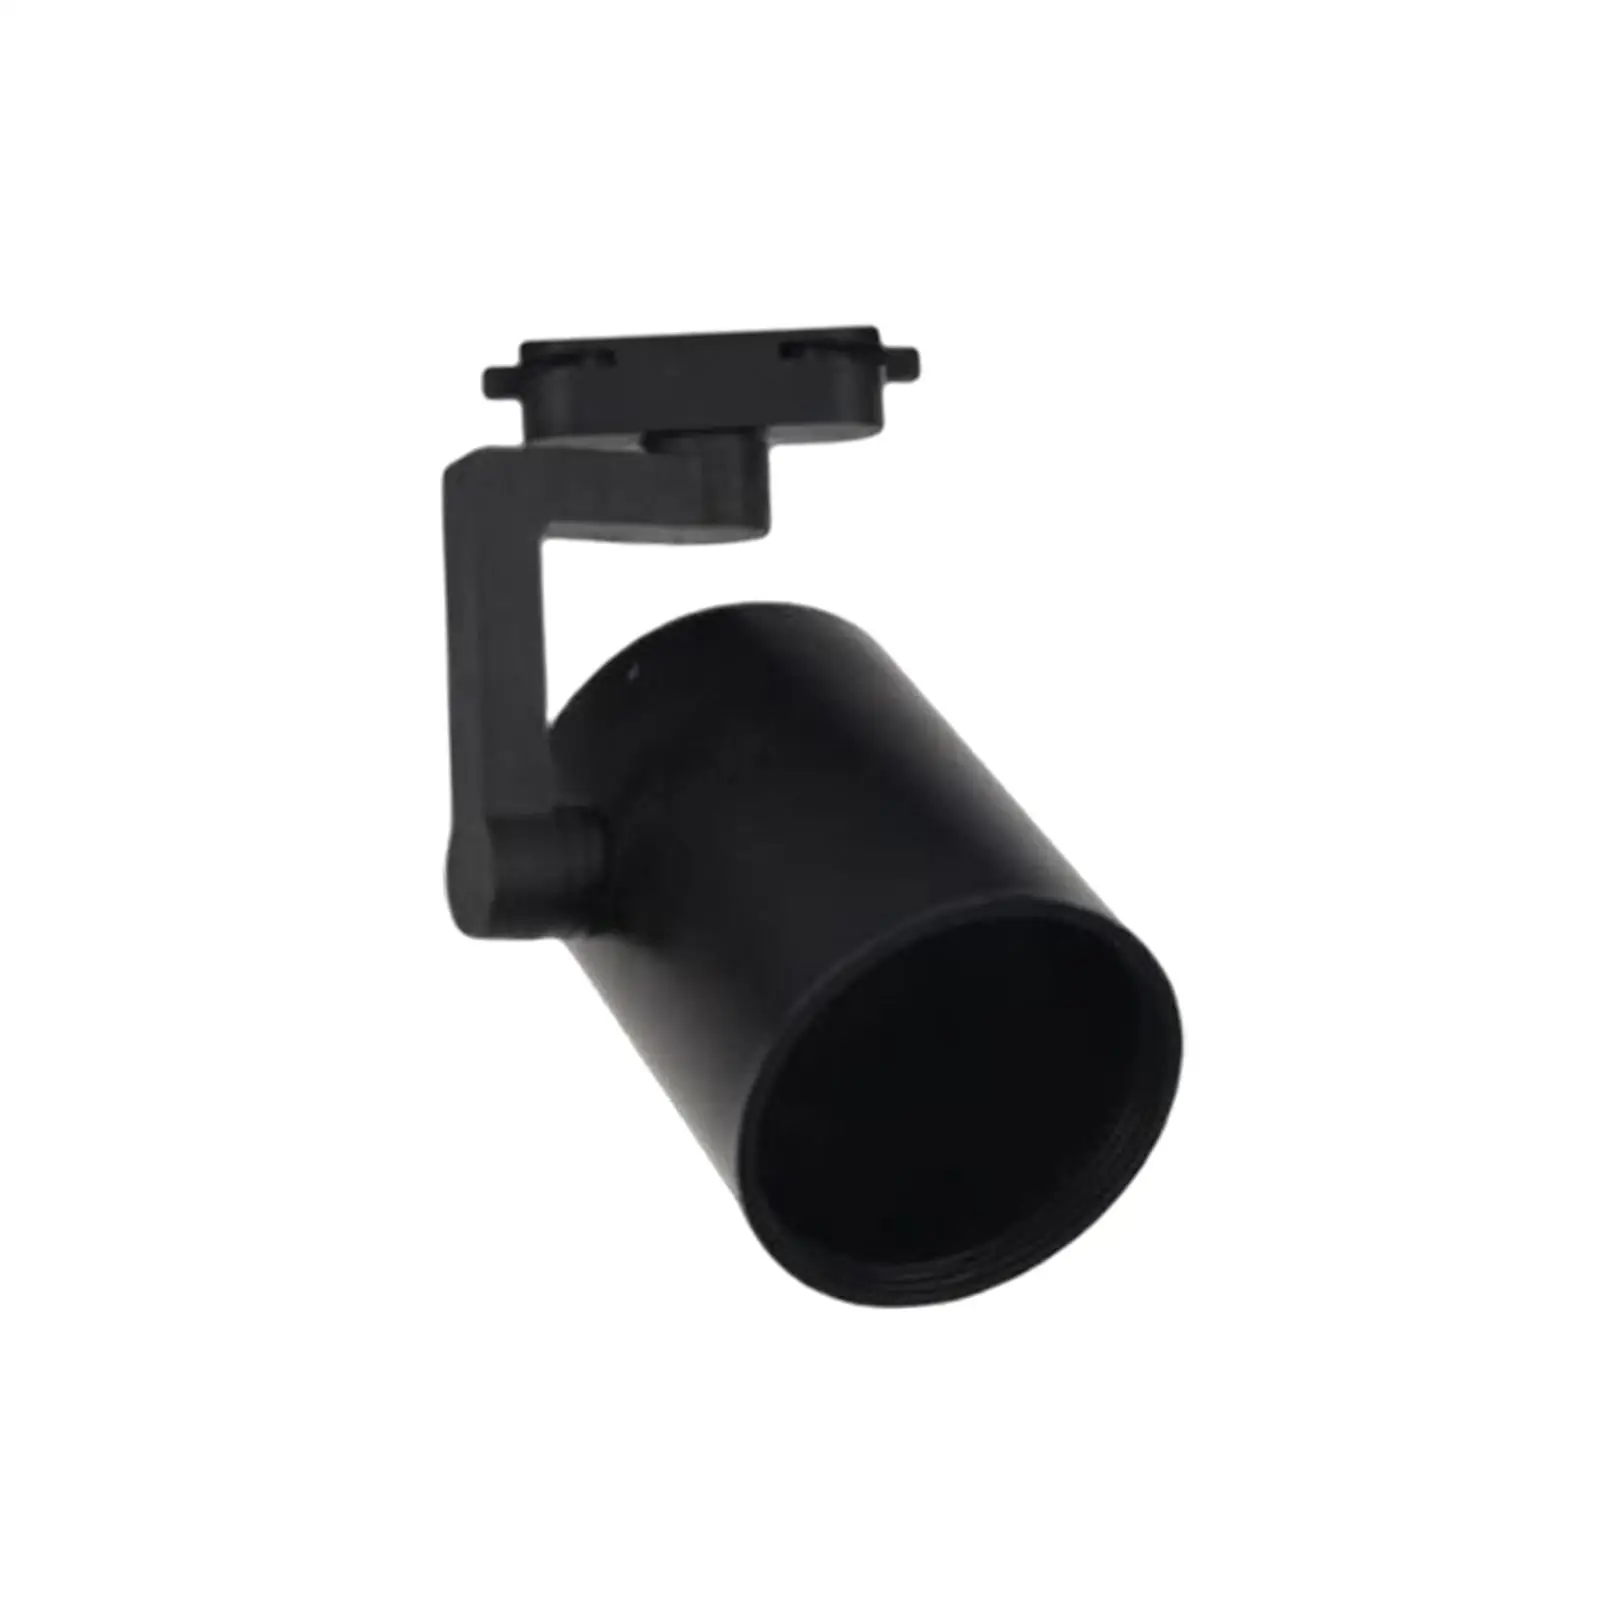 Adjustable Par30 Spotlight Track Lamp Cover Lampshade Holder E27 Base Black Accessory Sturdy for Living Room Durable Lightweight